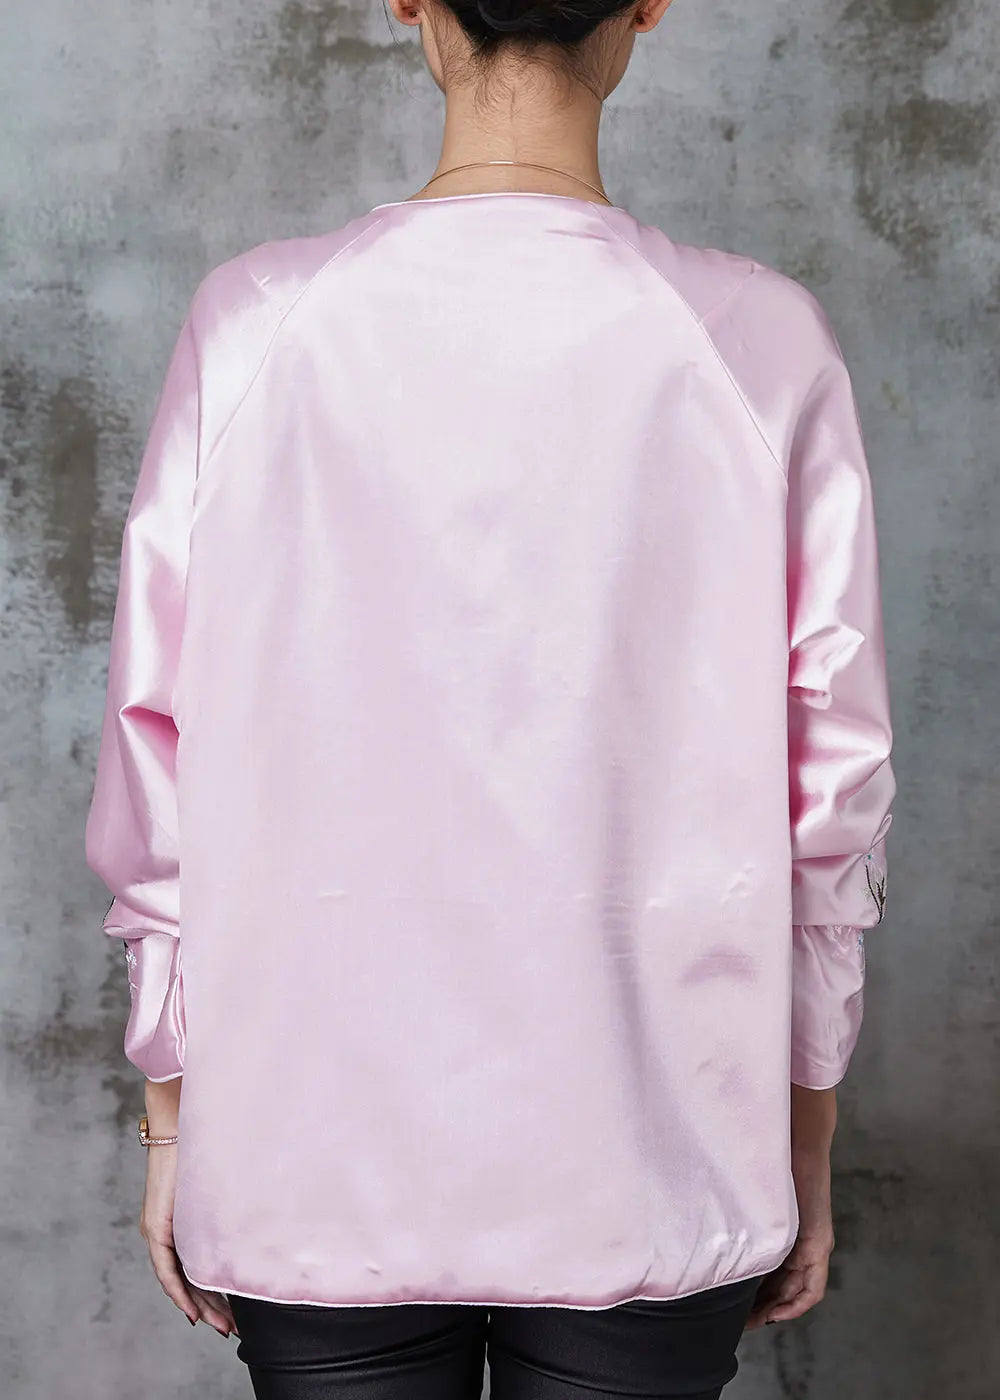 Stylish Pink Embroidered Pockets Silk Jacket Spring Ada Fashion